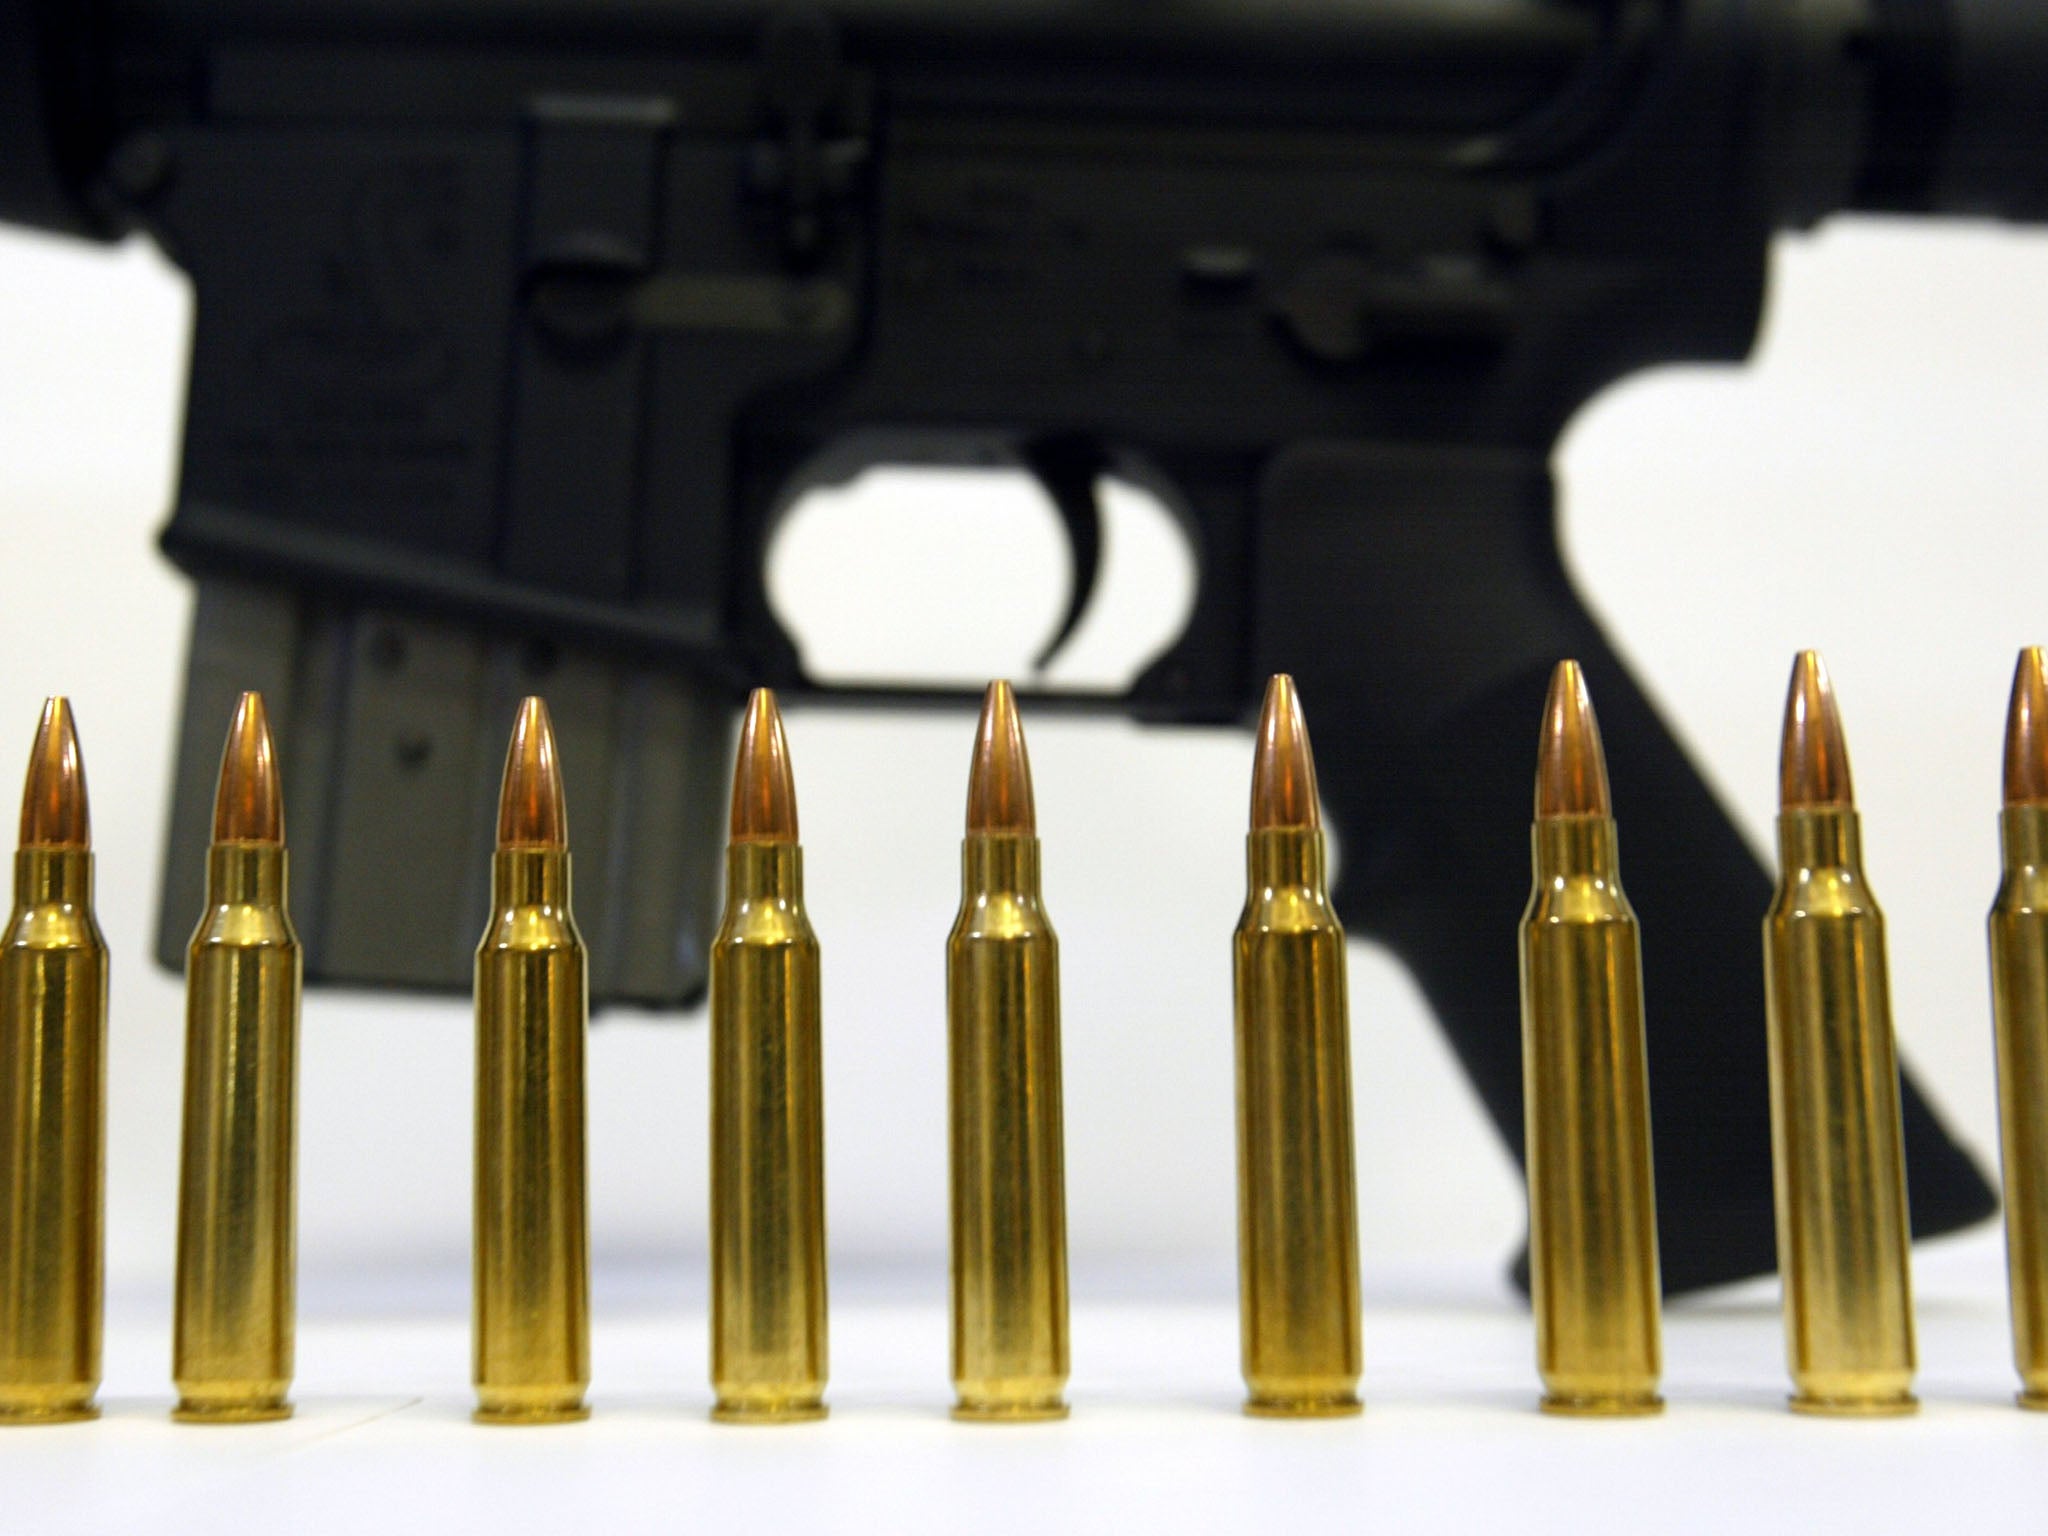 Americans debate their gun laws in the wake of the Newtown massacre